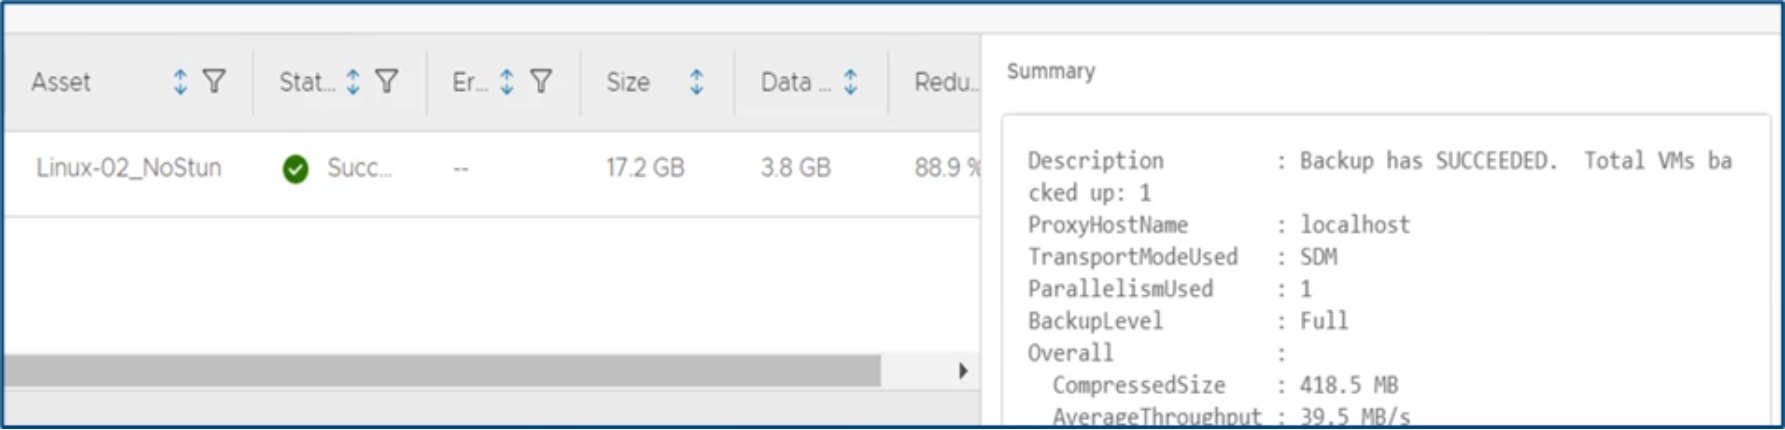 PowerProtect Data Manager Appliance GUI screenshot showing a successful Transparent Snapshots backup job